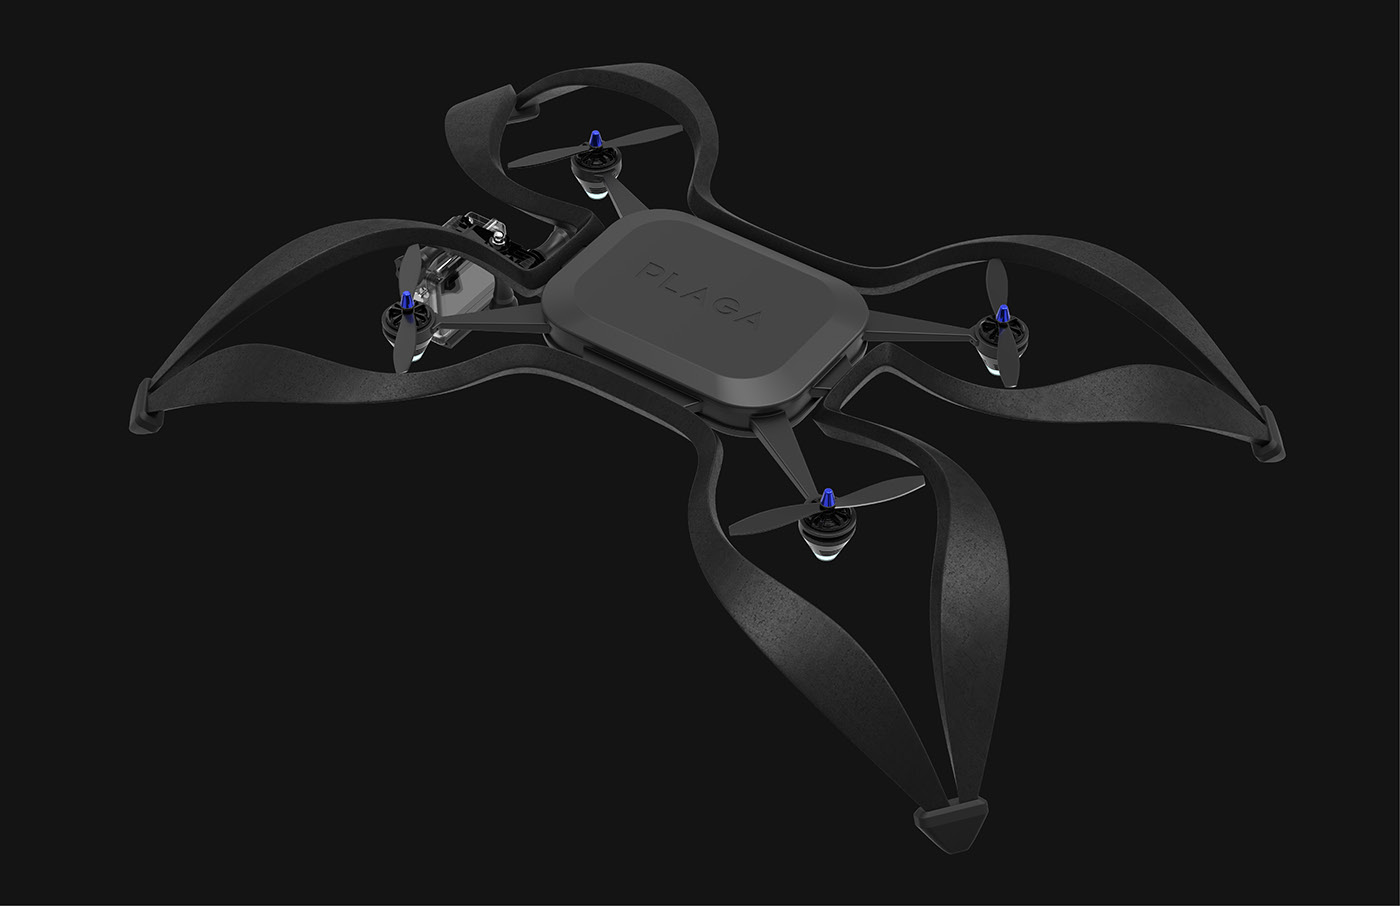 drone plaga designers concept modern minimal product future cosmic dark